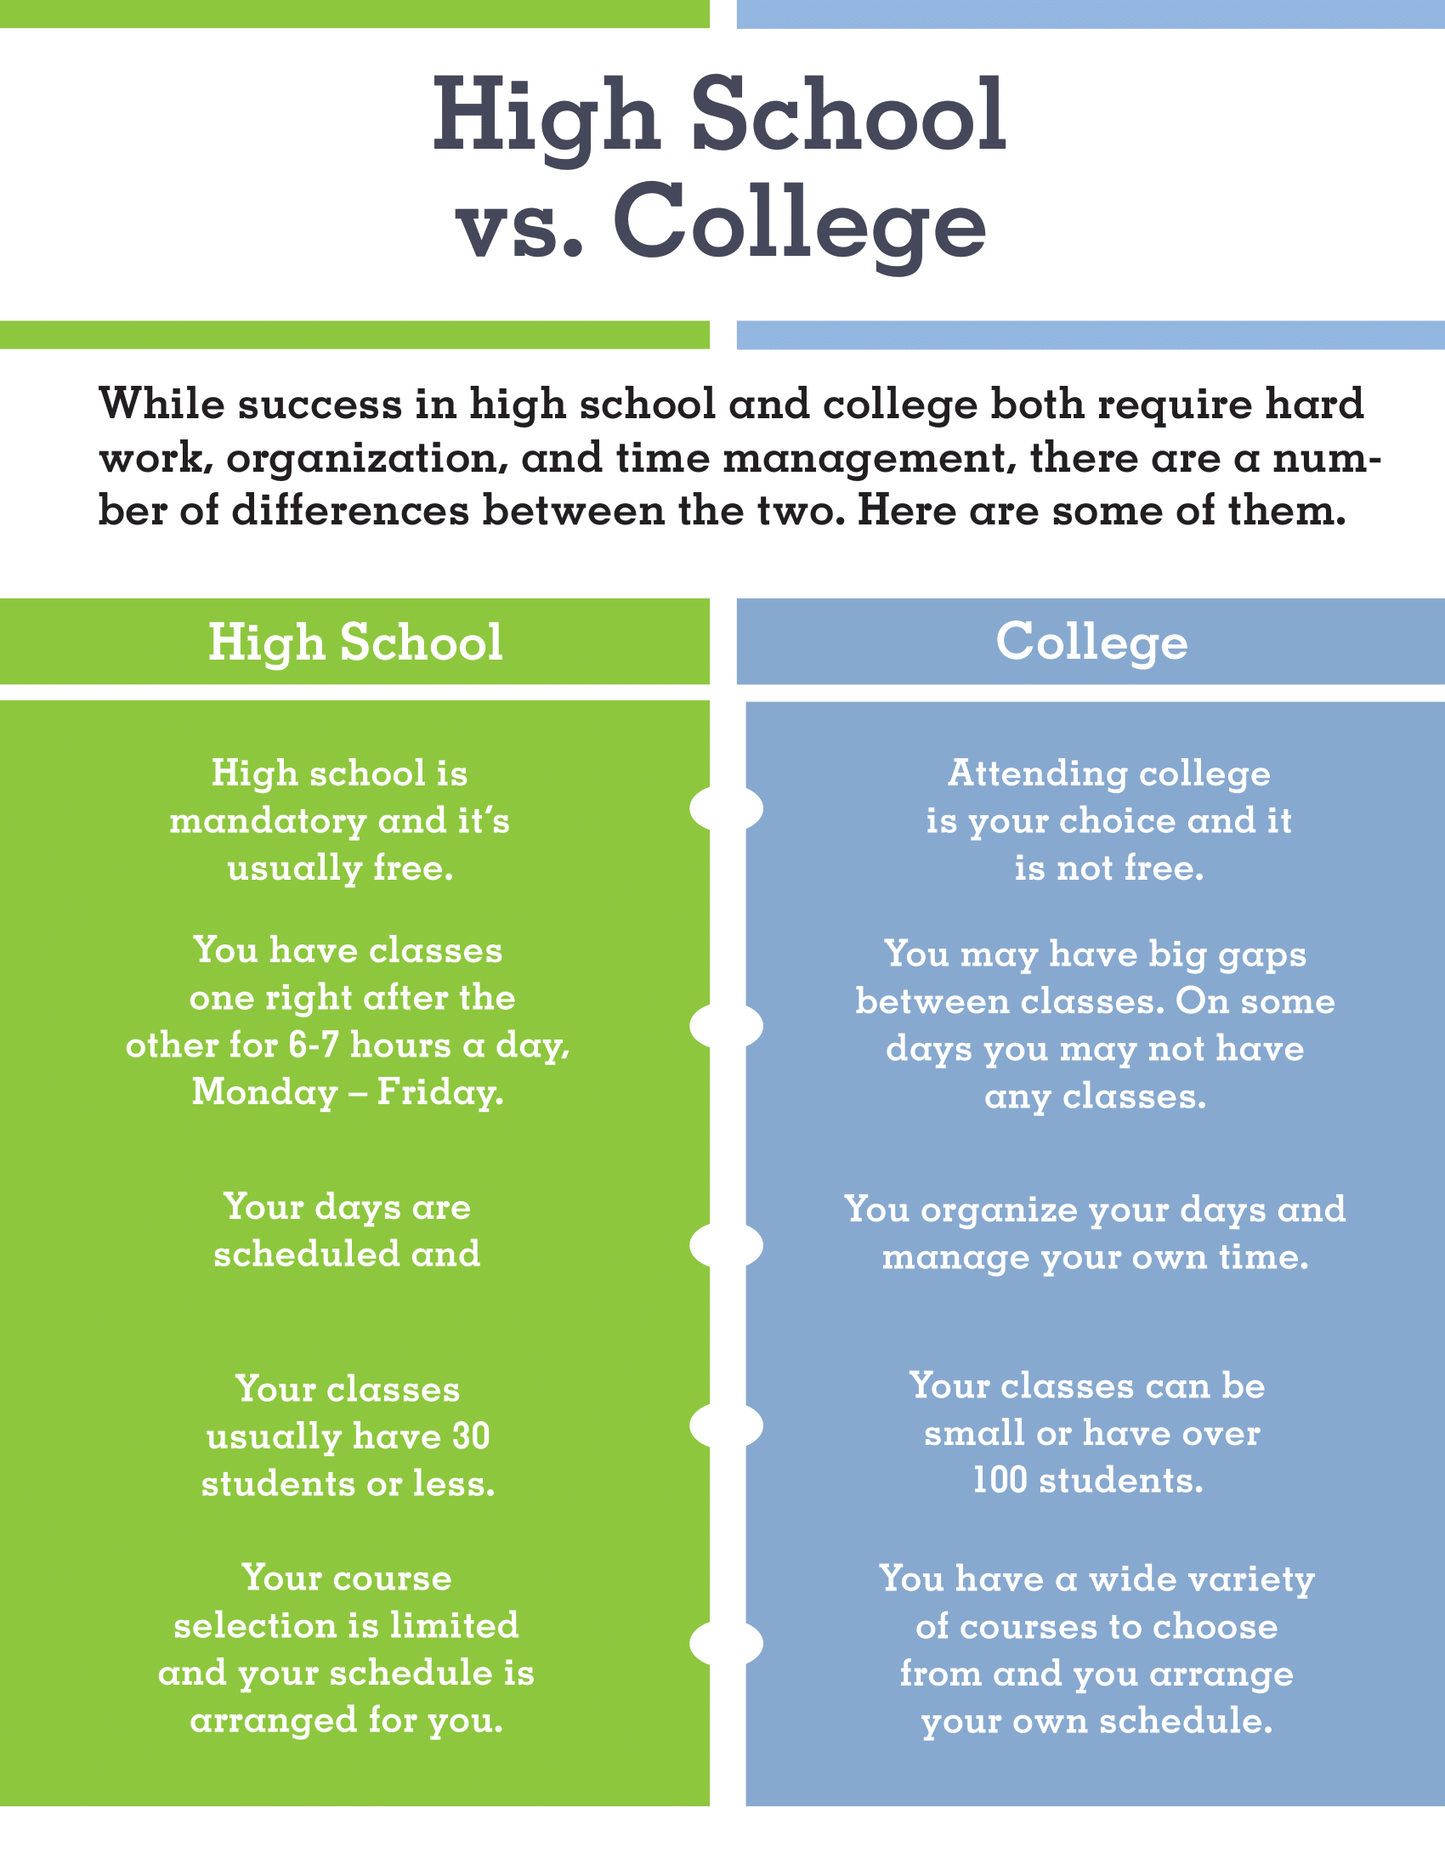 High School vs. College